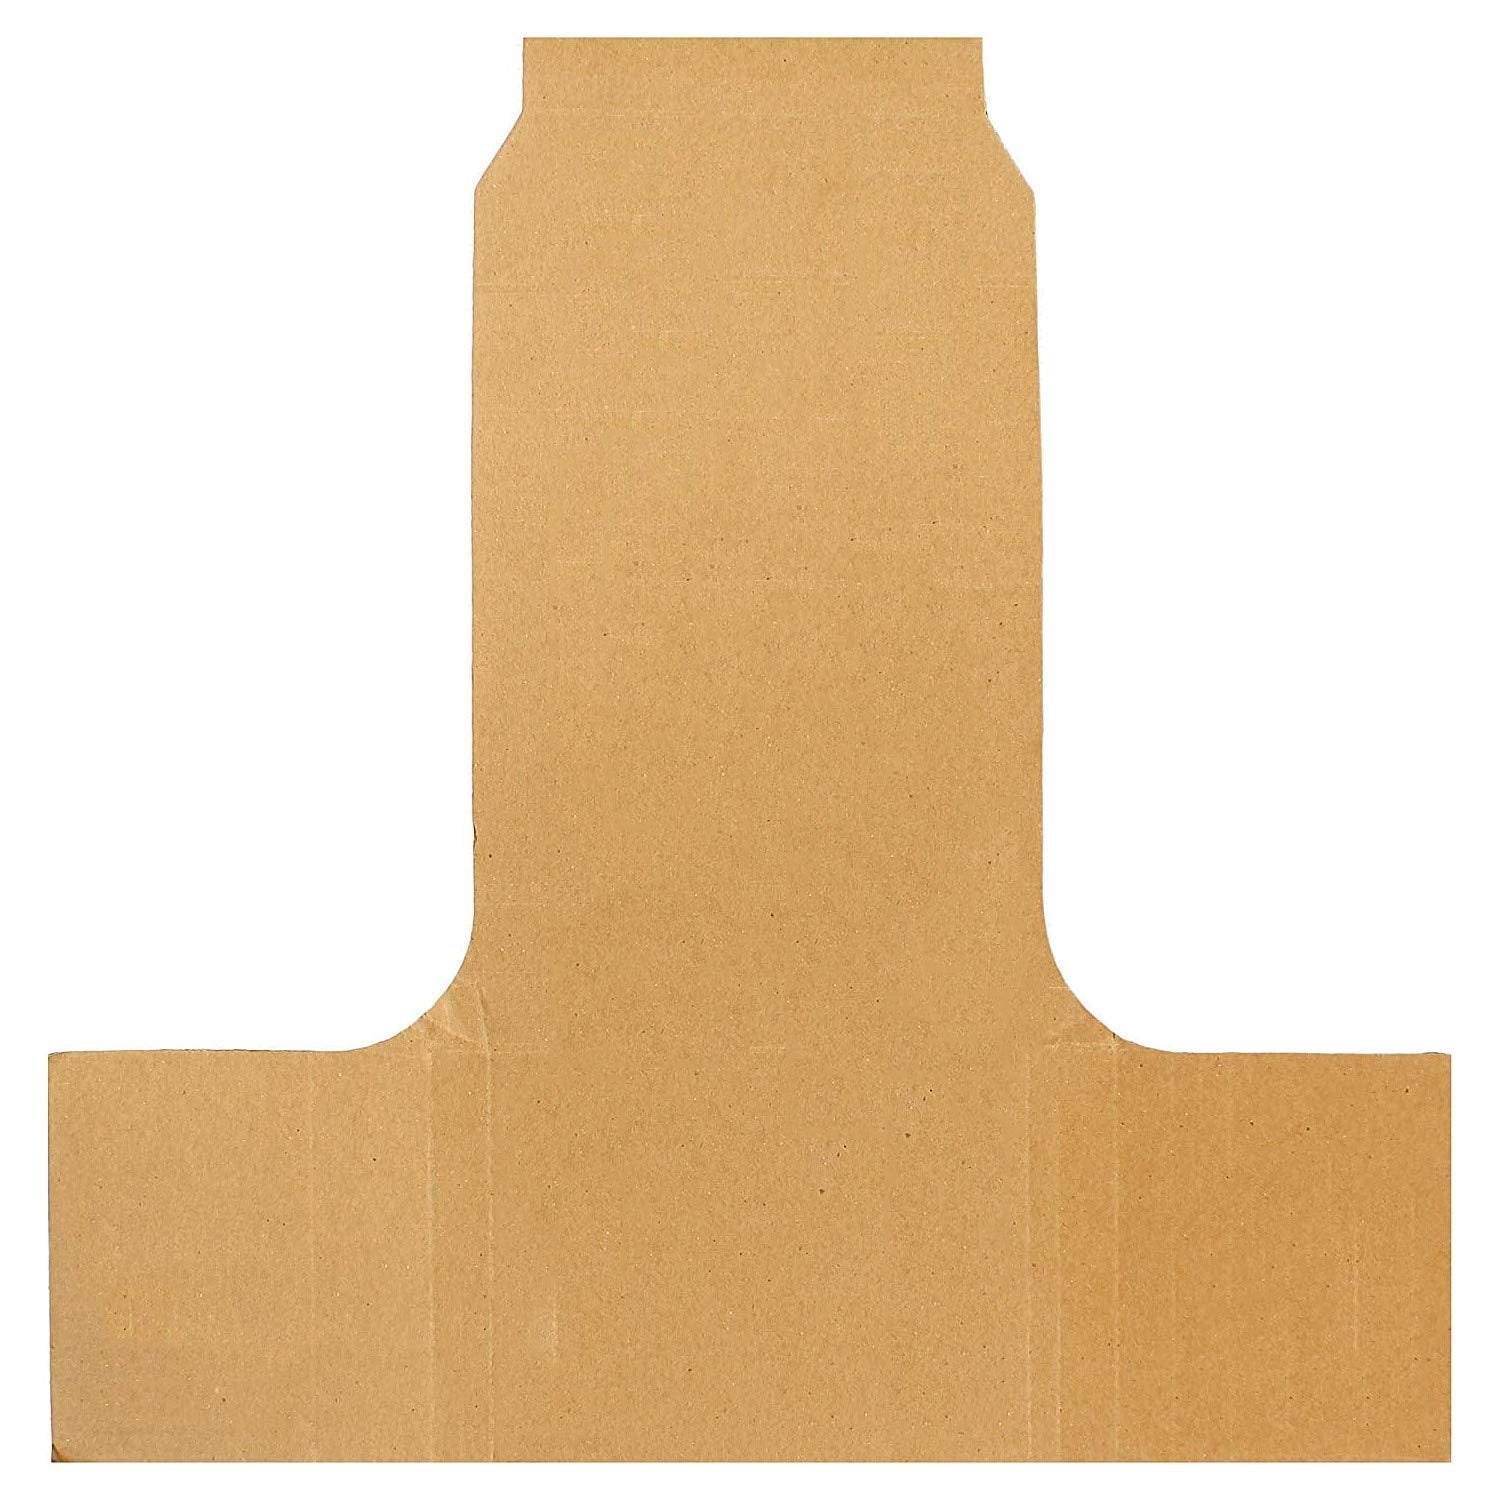 T Shape Folders for Shipping, Flexible Box